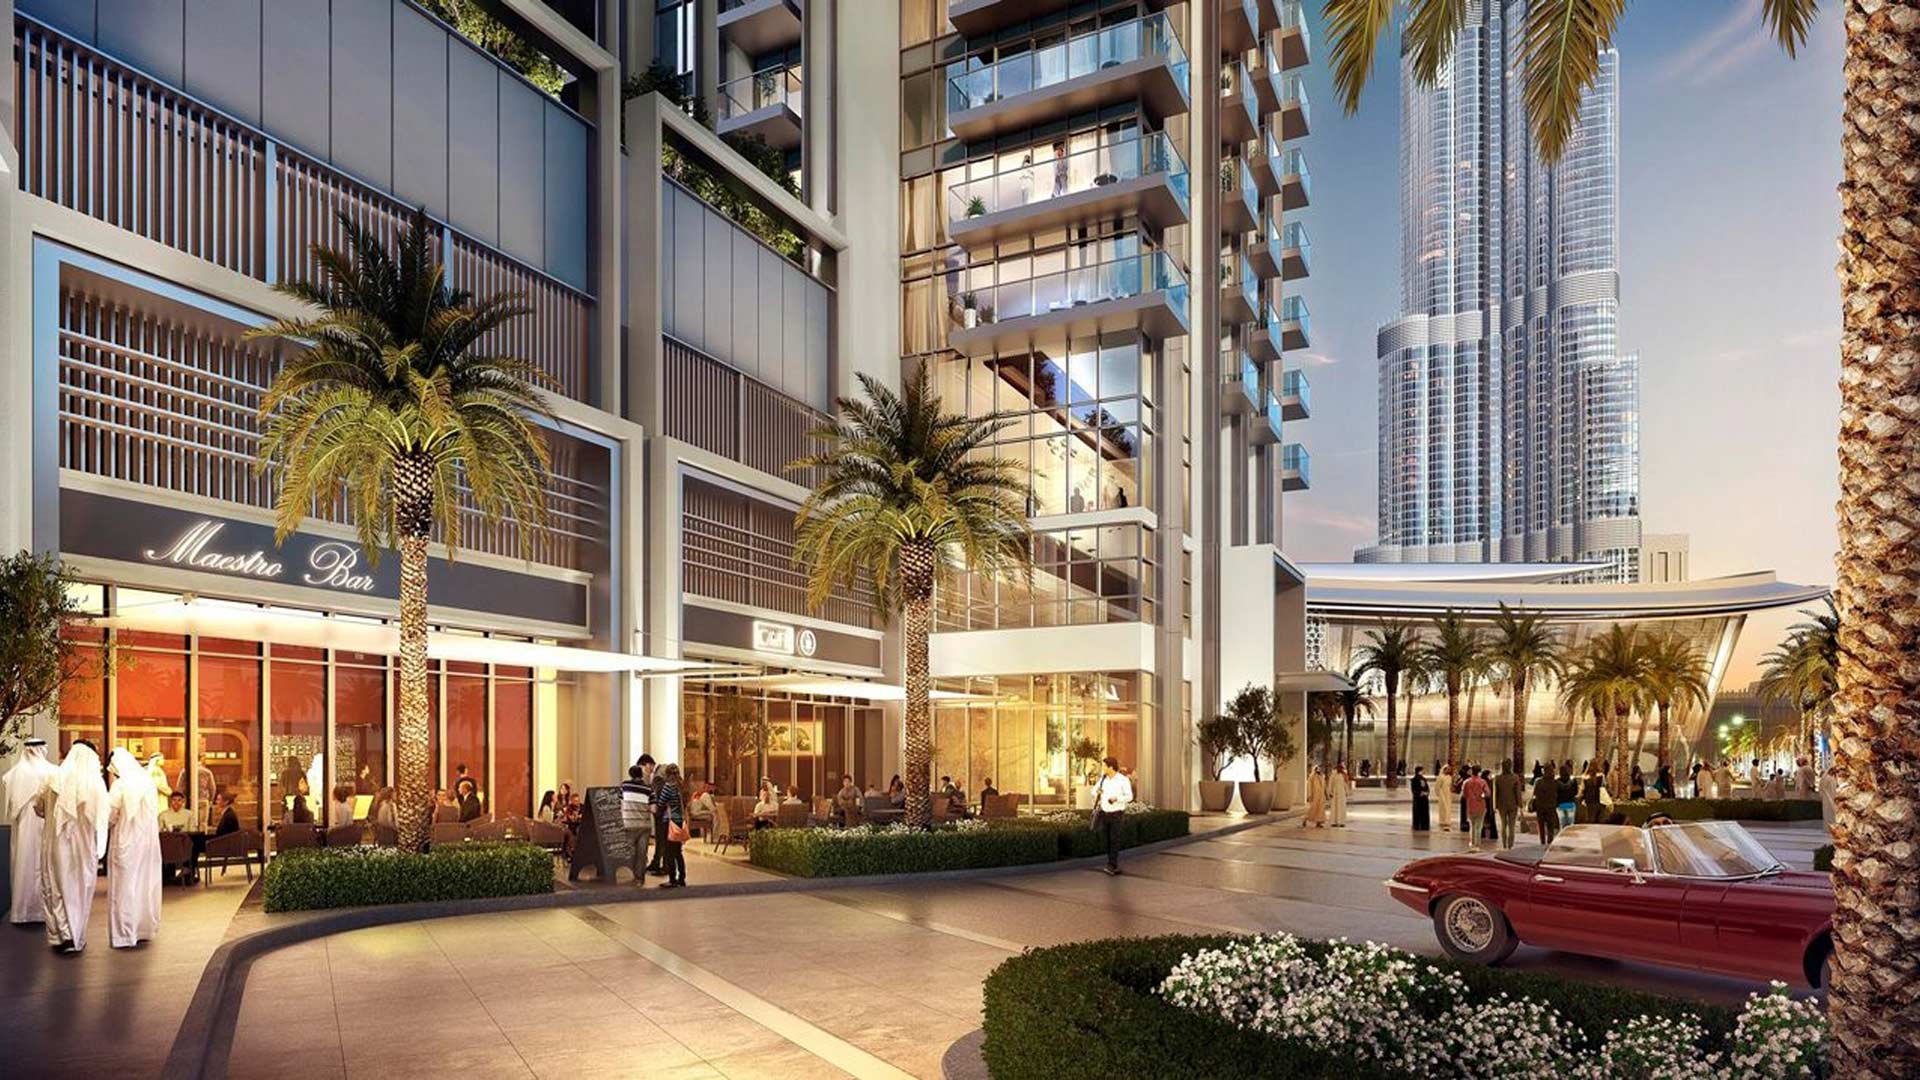 ST.REGIS RESIDENCES by Emaar Properties in Downtown Dubai, Dubai - 6